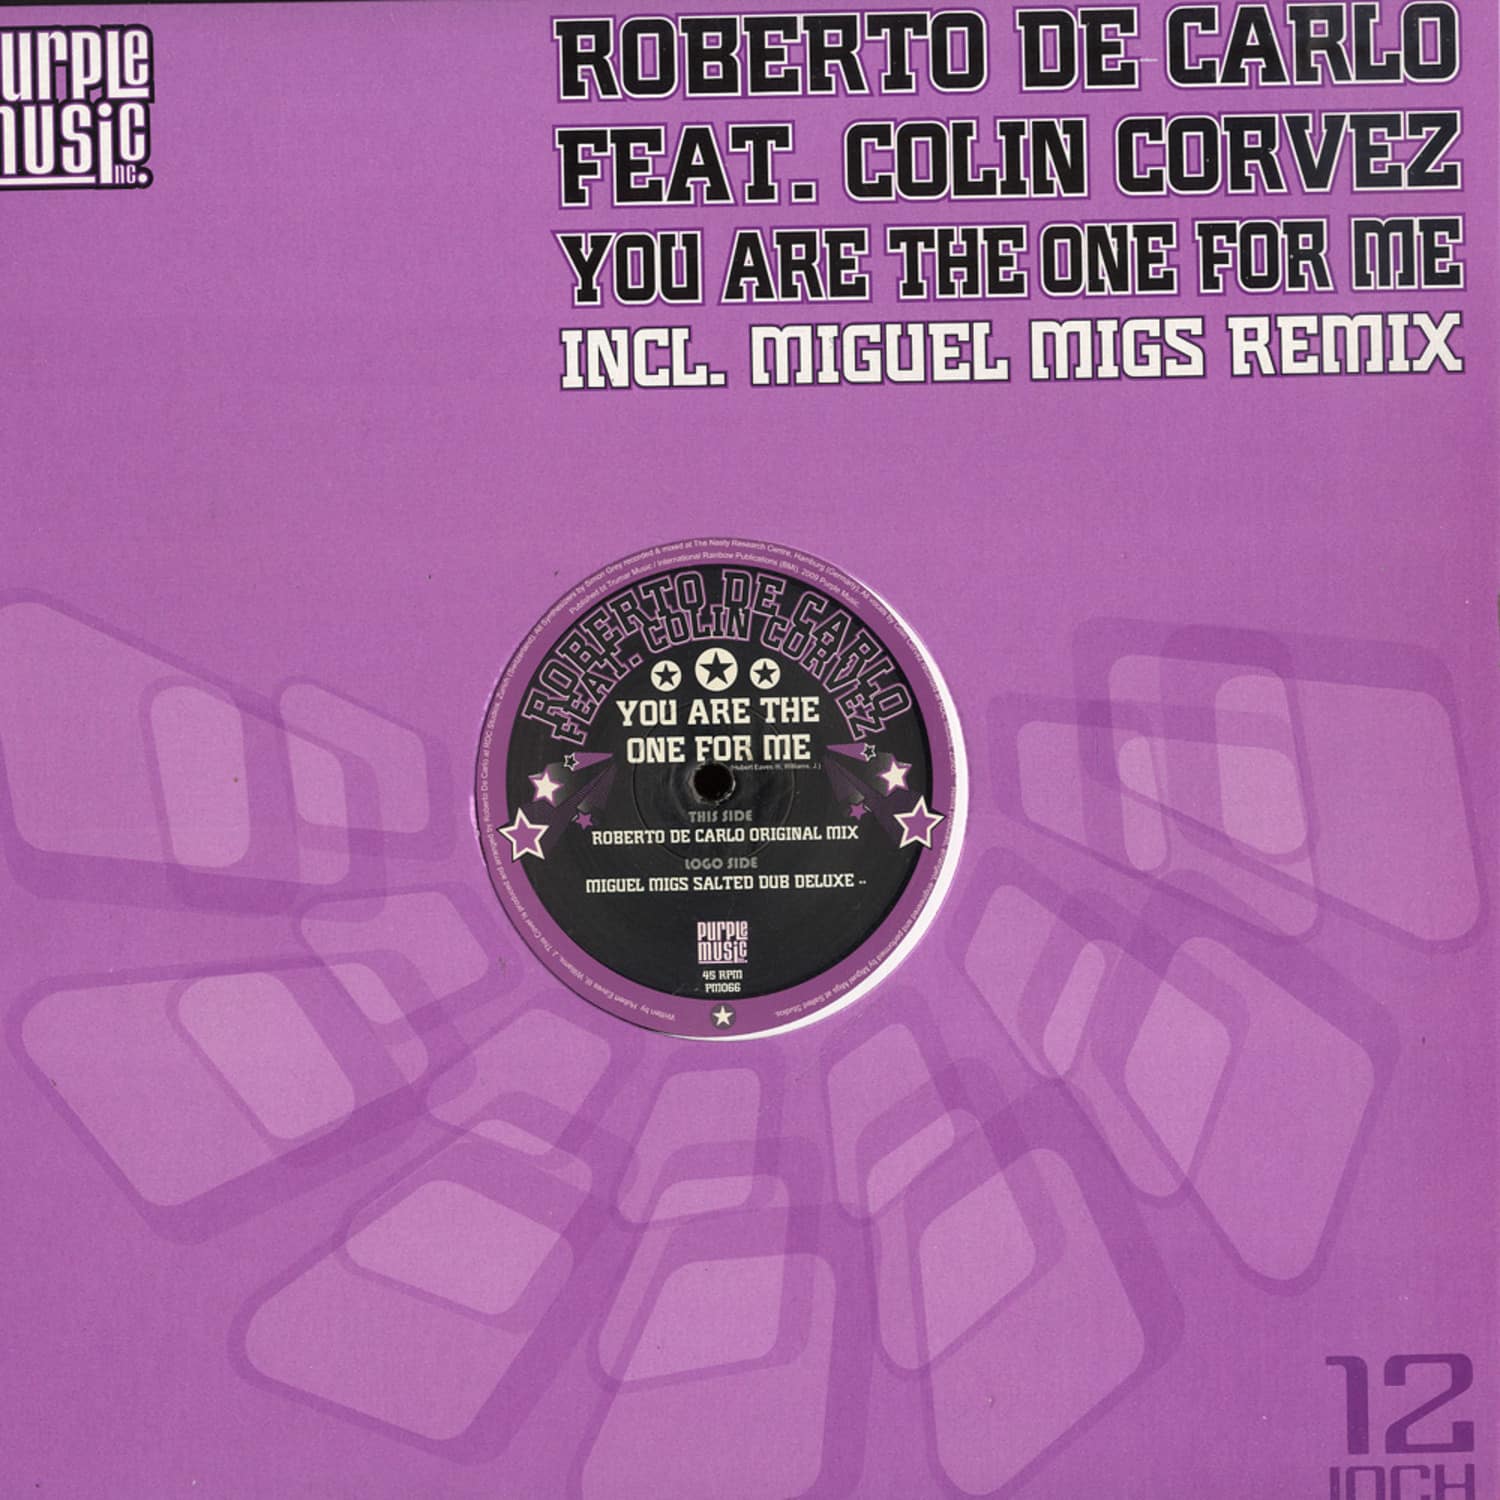 Roberto De Carlo feat Colin Corvez - YOU ARE THE ONE